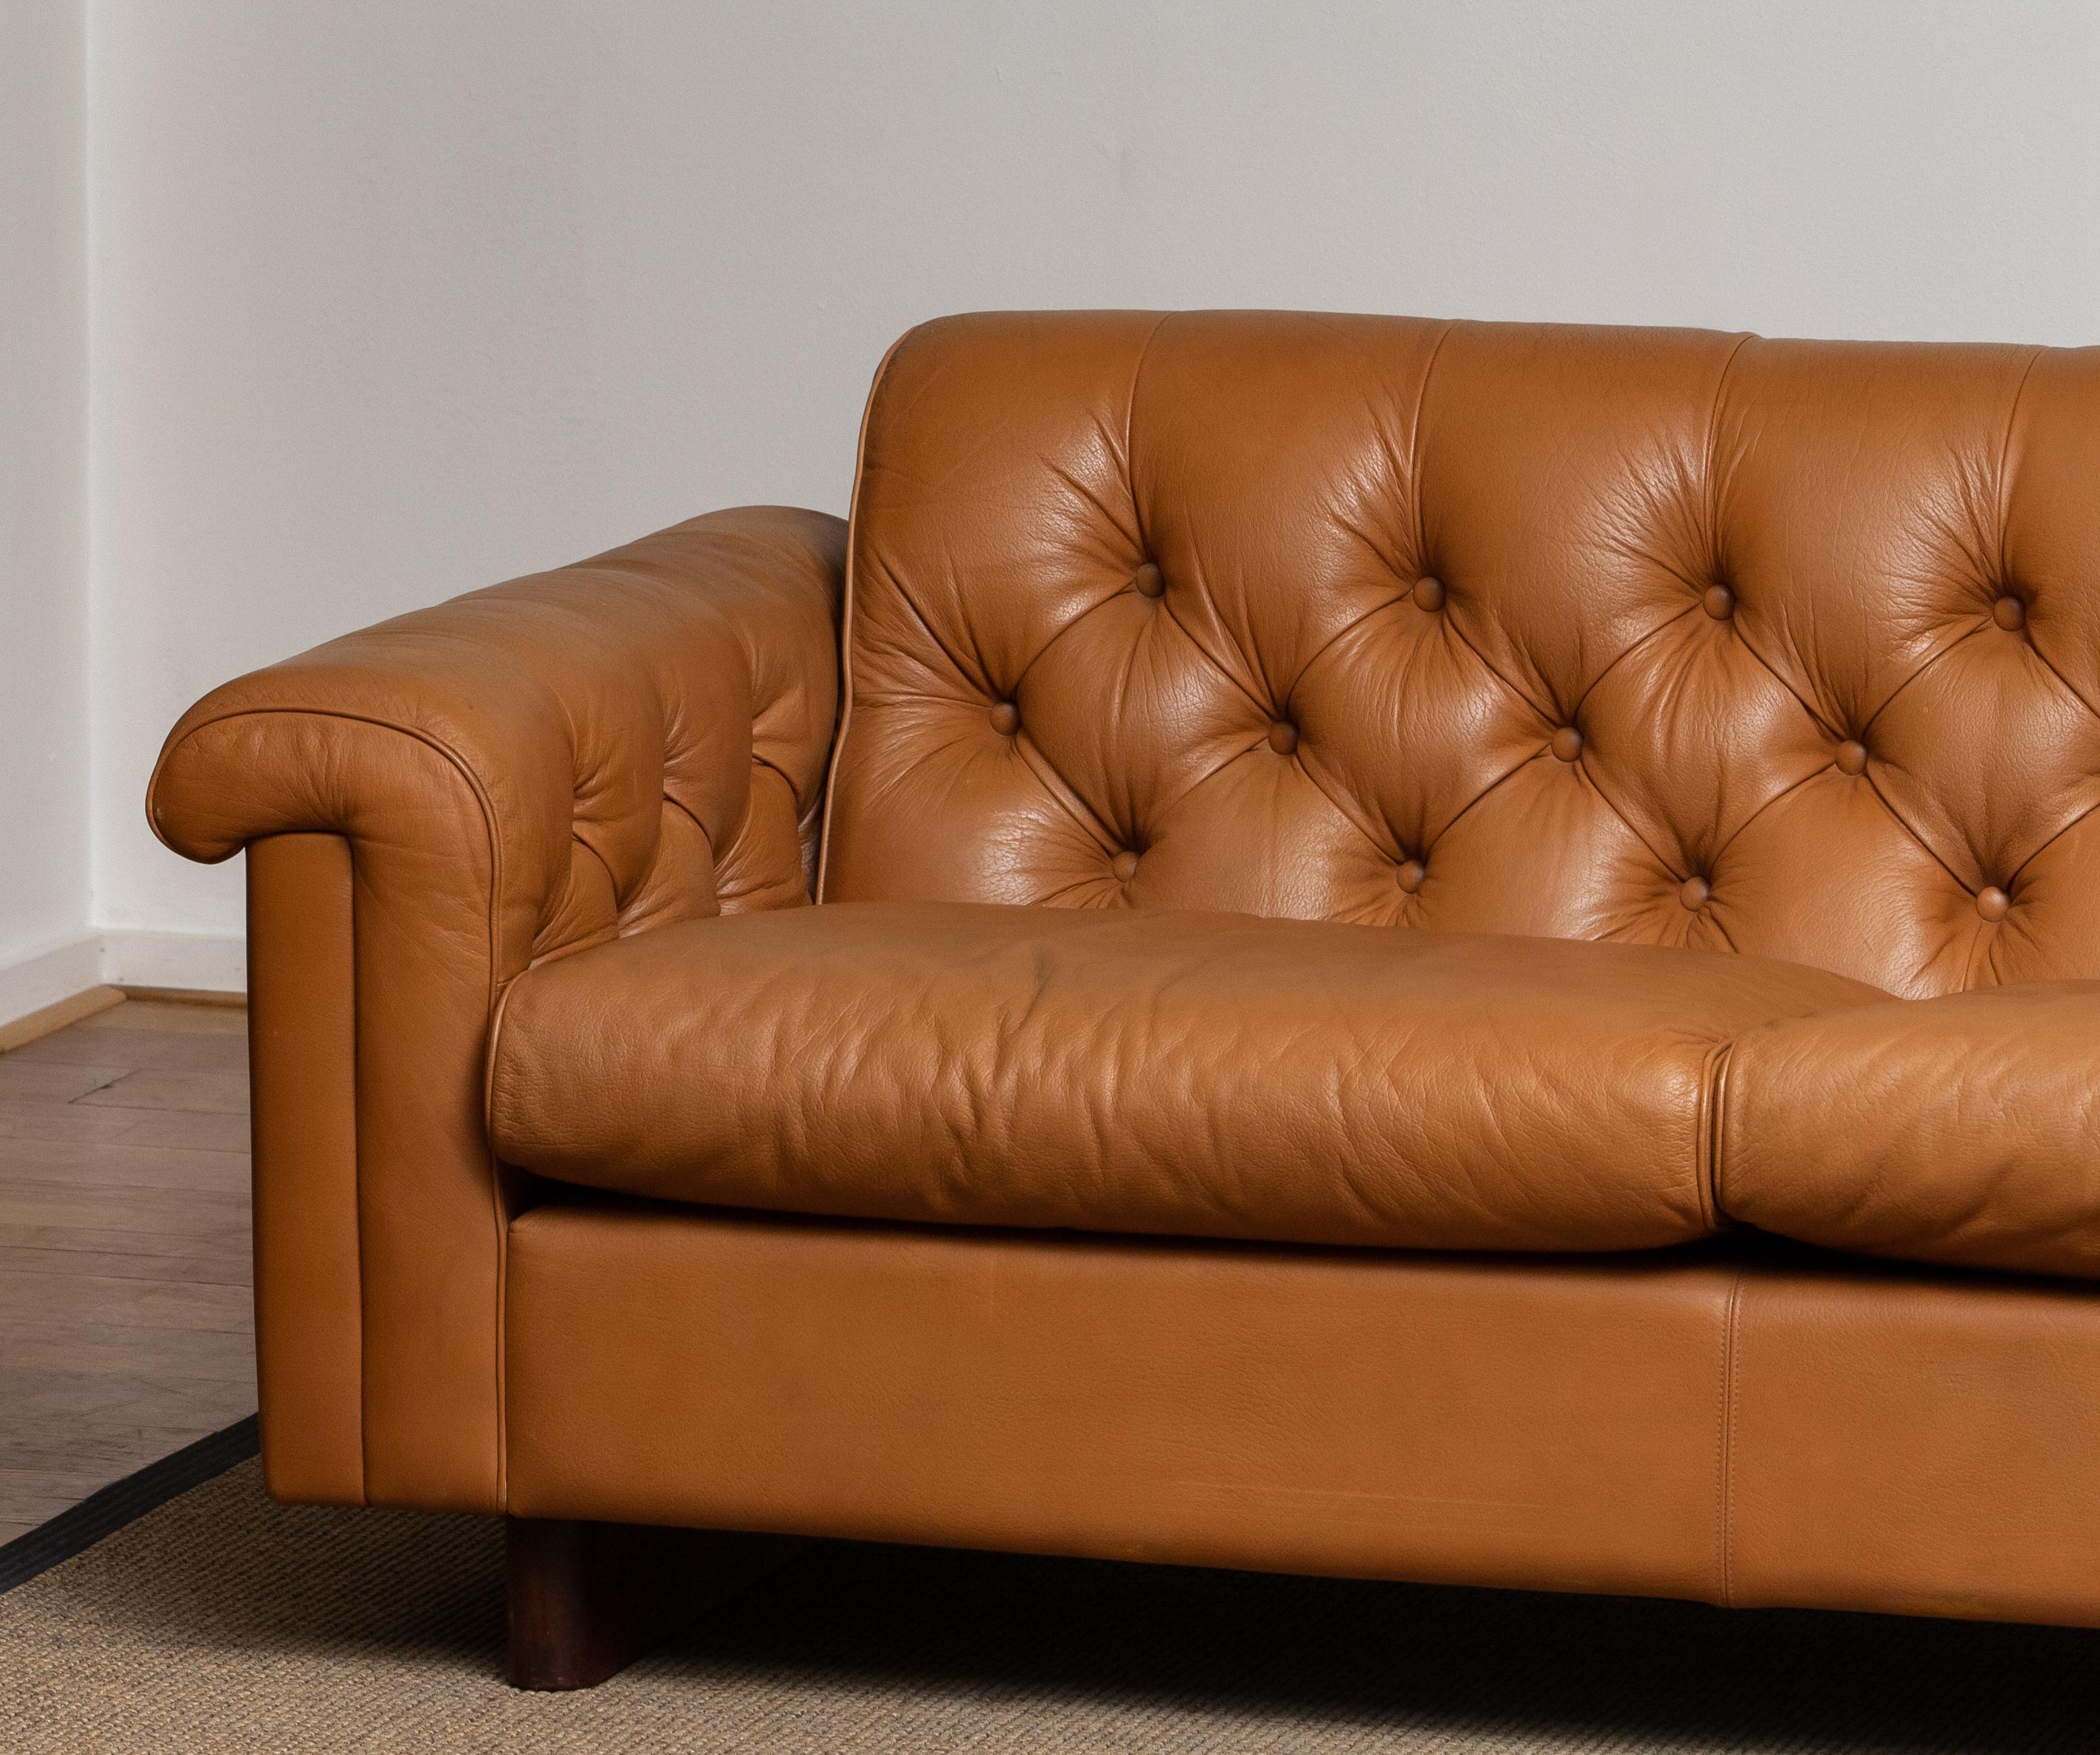 Scandinavian Modern 1970's Sofa by Karl Erik Ekselius for JOC Design in Camel Color Tufted Leather